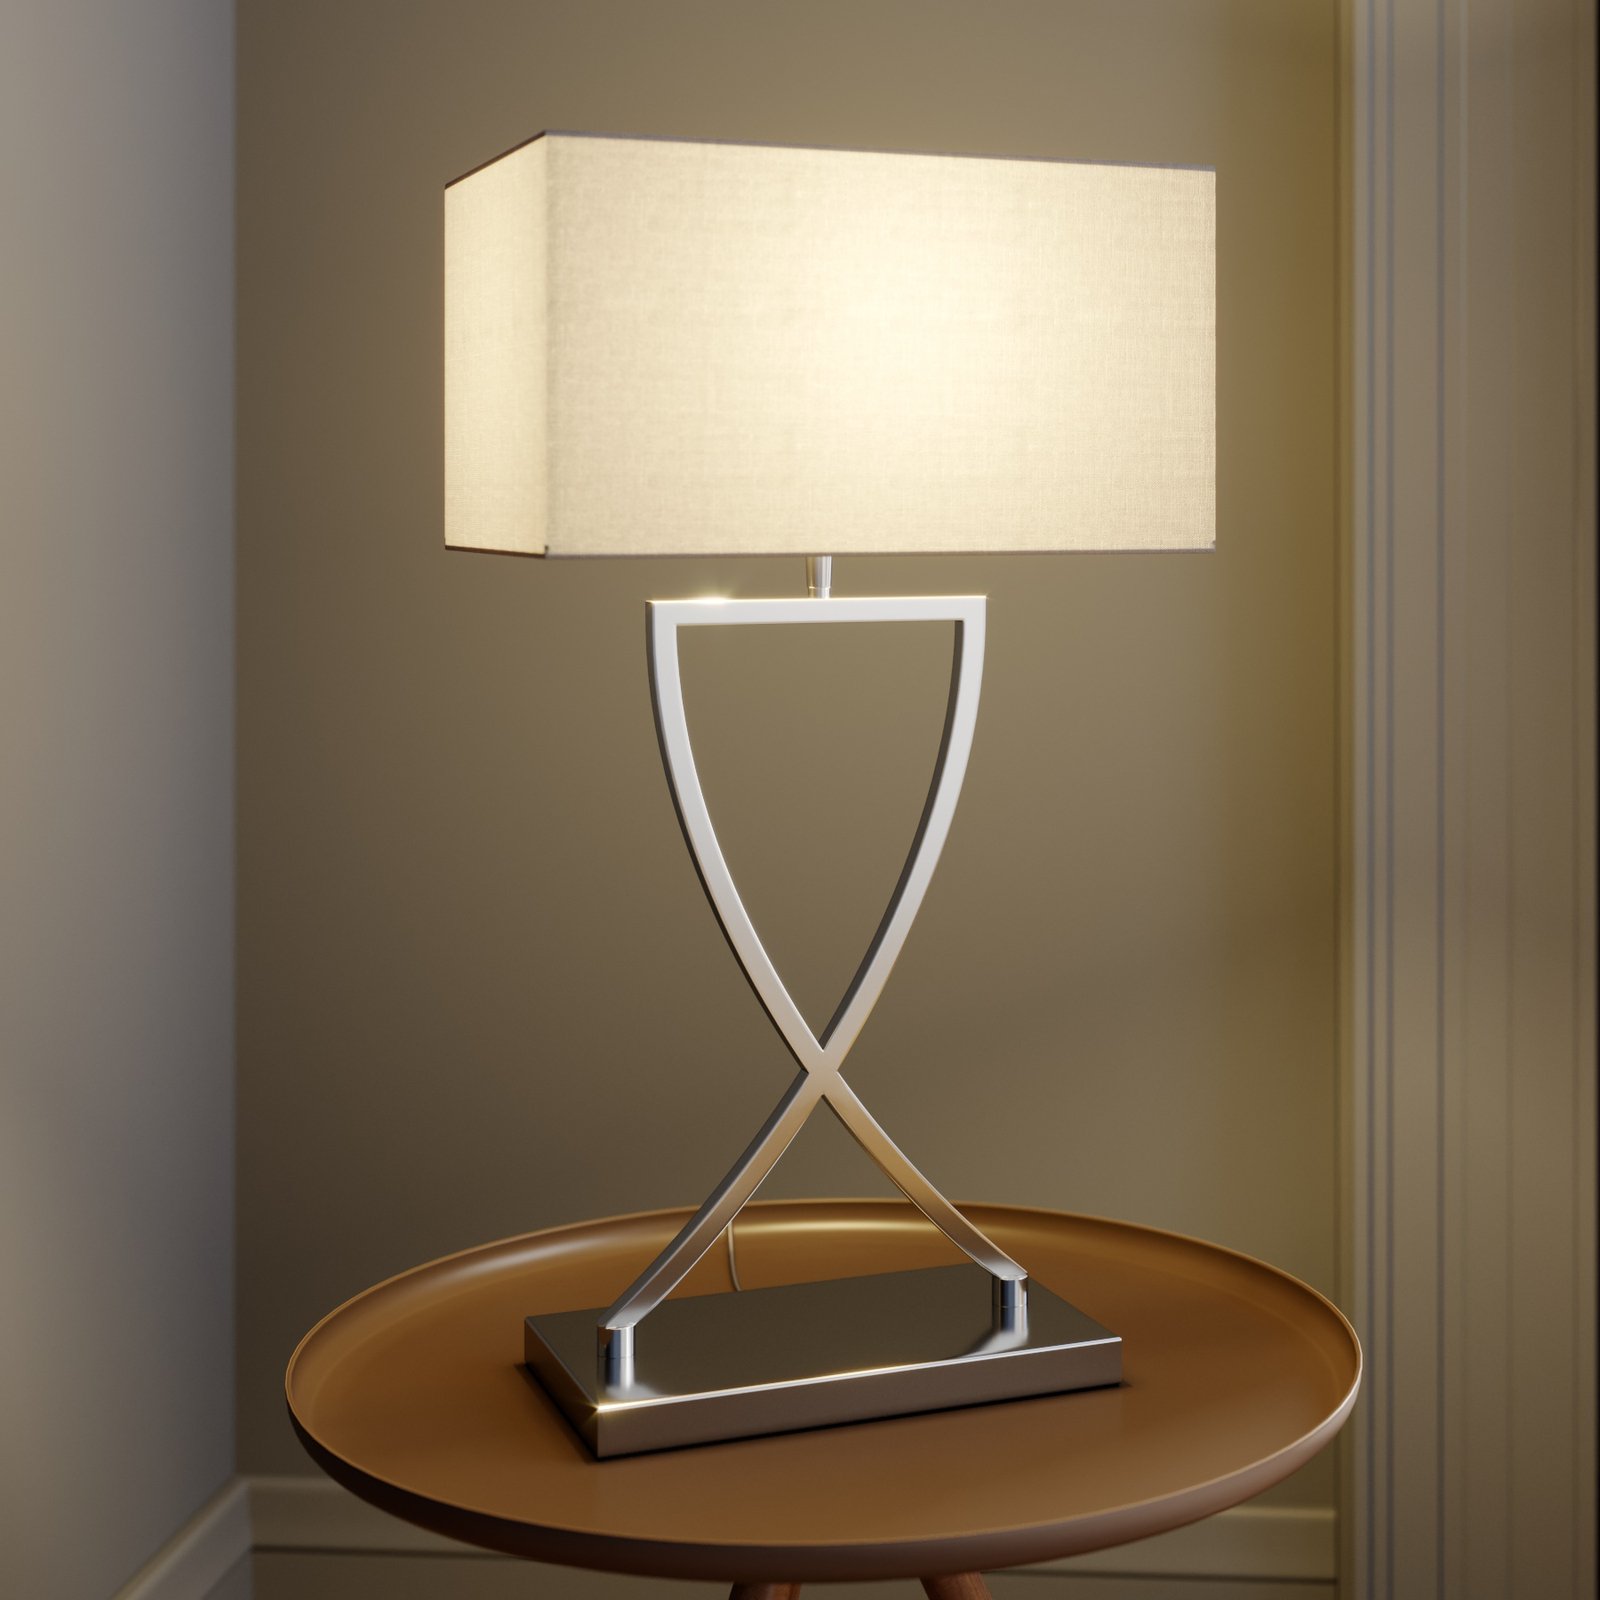 Lucande Evaine asztali lámpa, króm, fehér búra